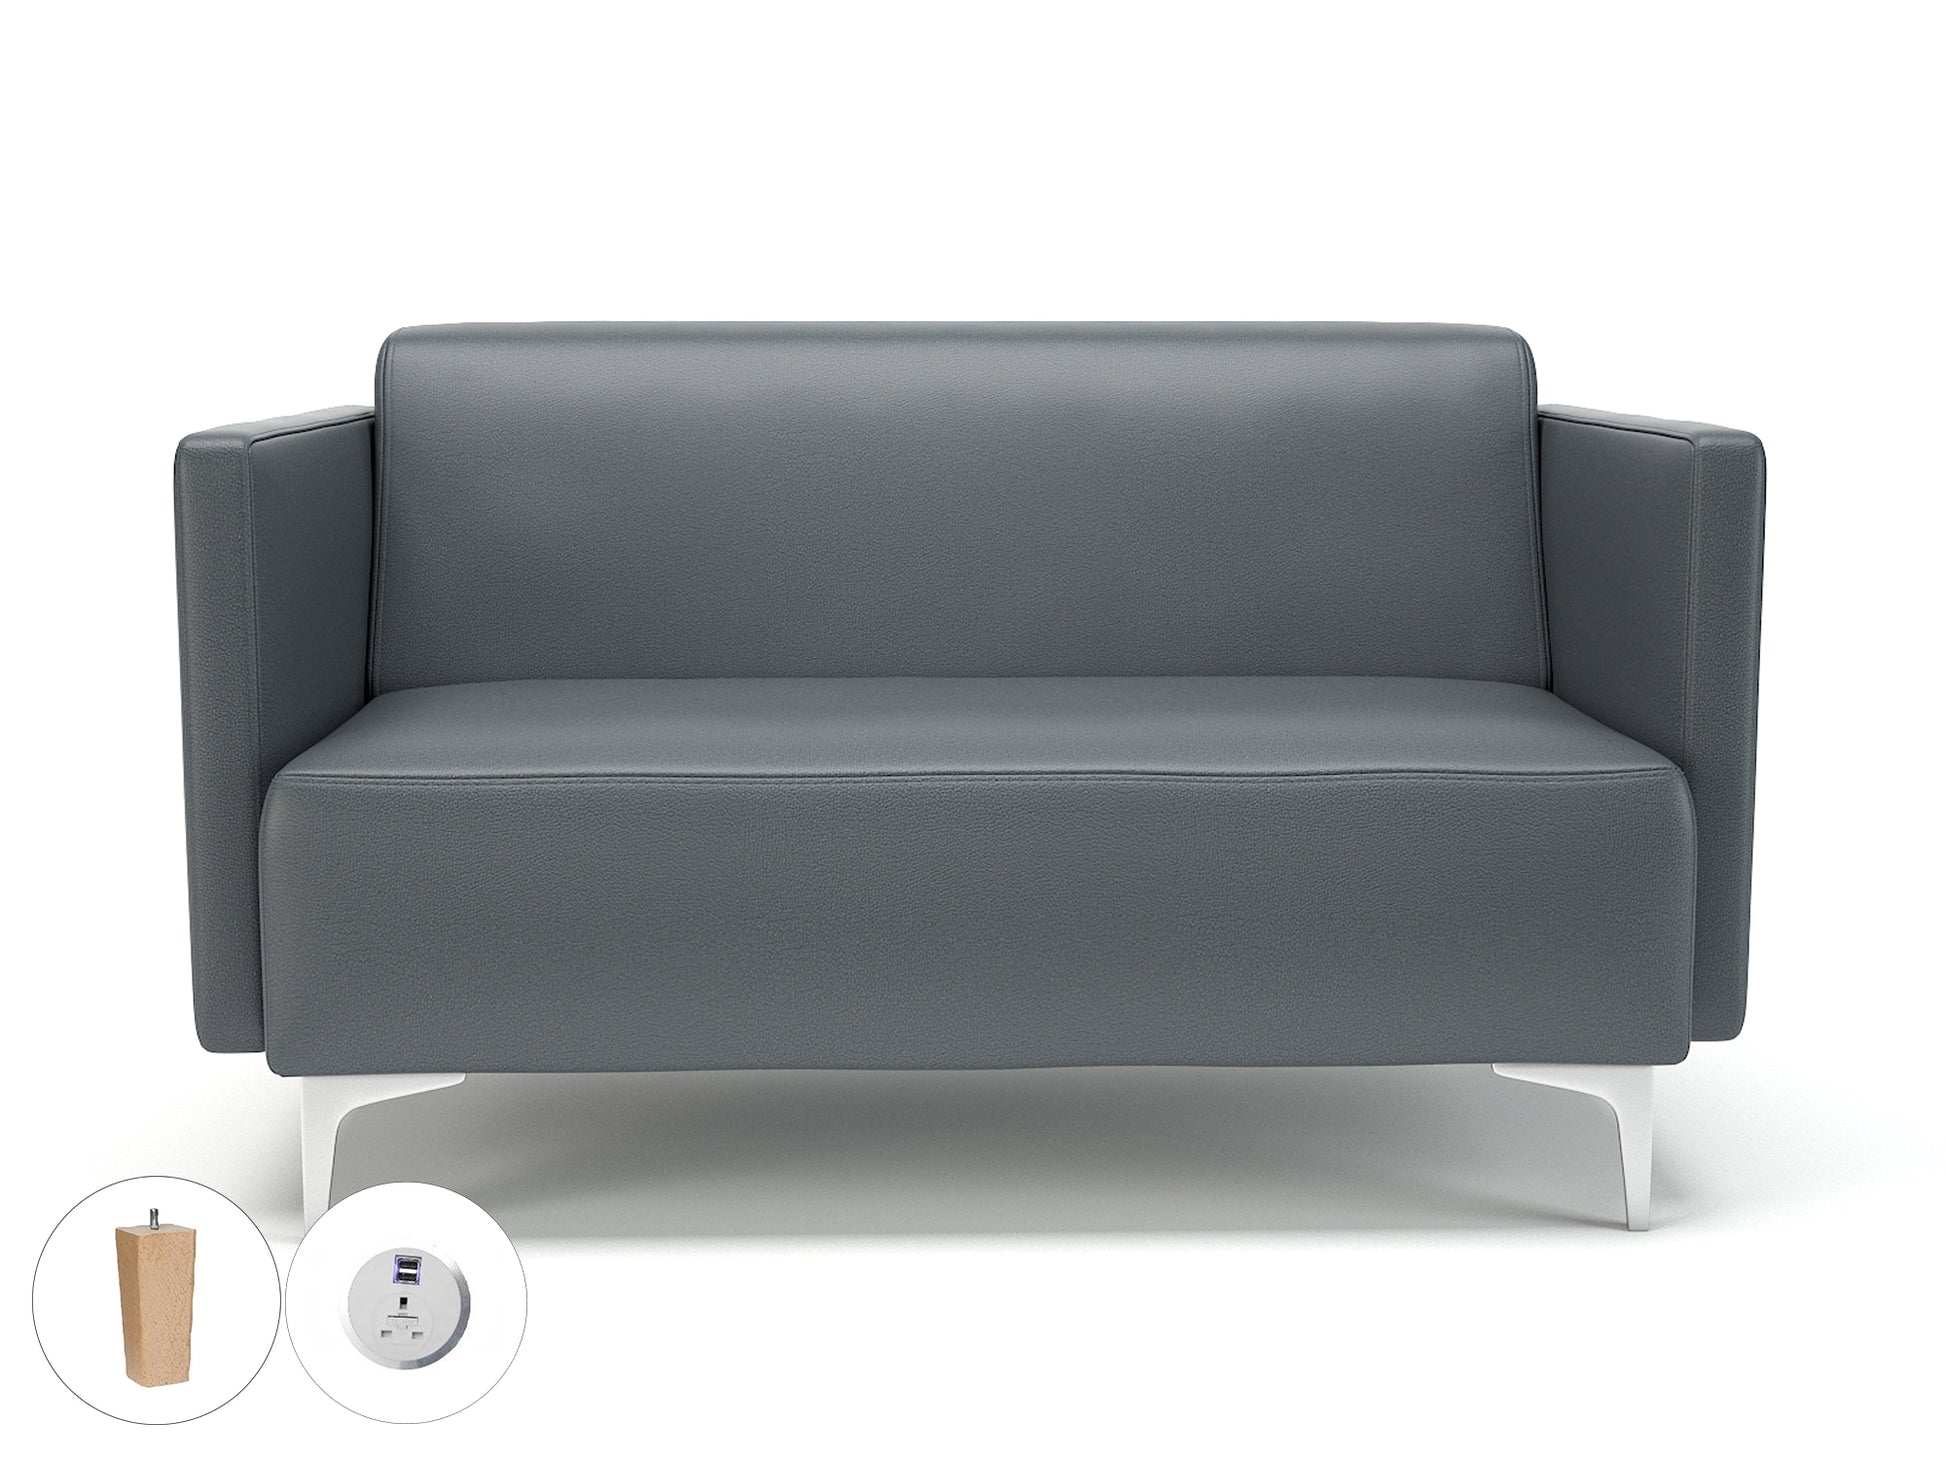 Napa Slim Arm 125cm Wide Sofa in Cristina Marrone Ultima Faux Leather with Socket